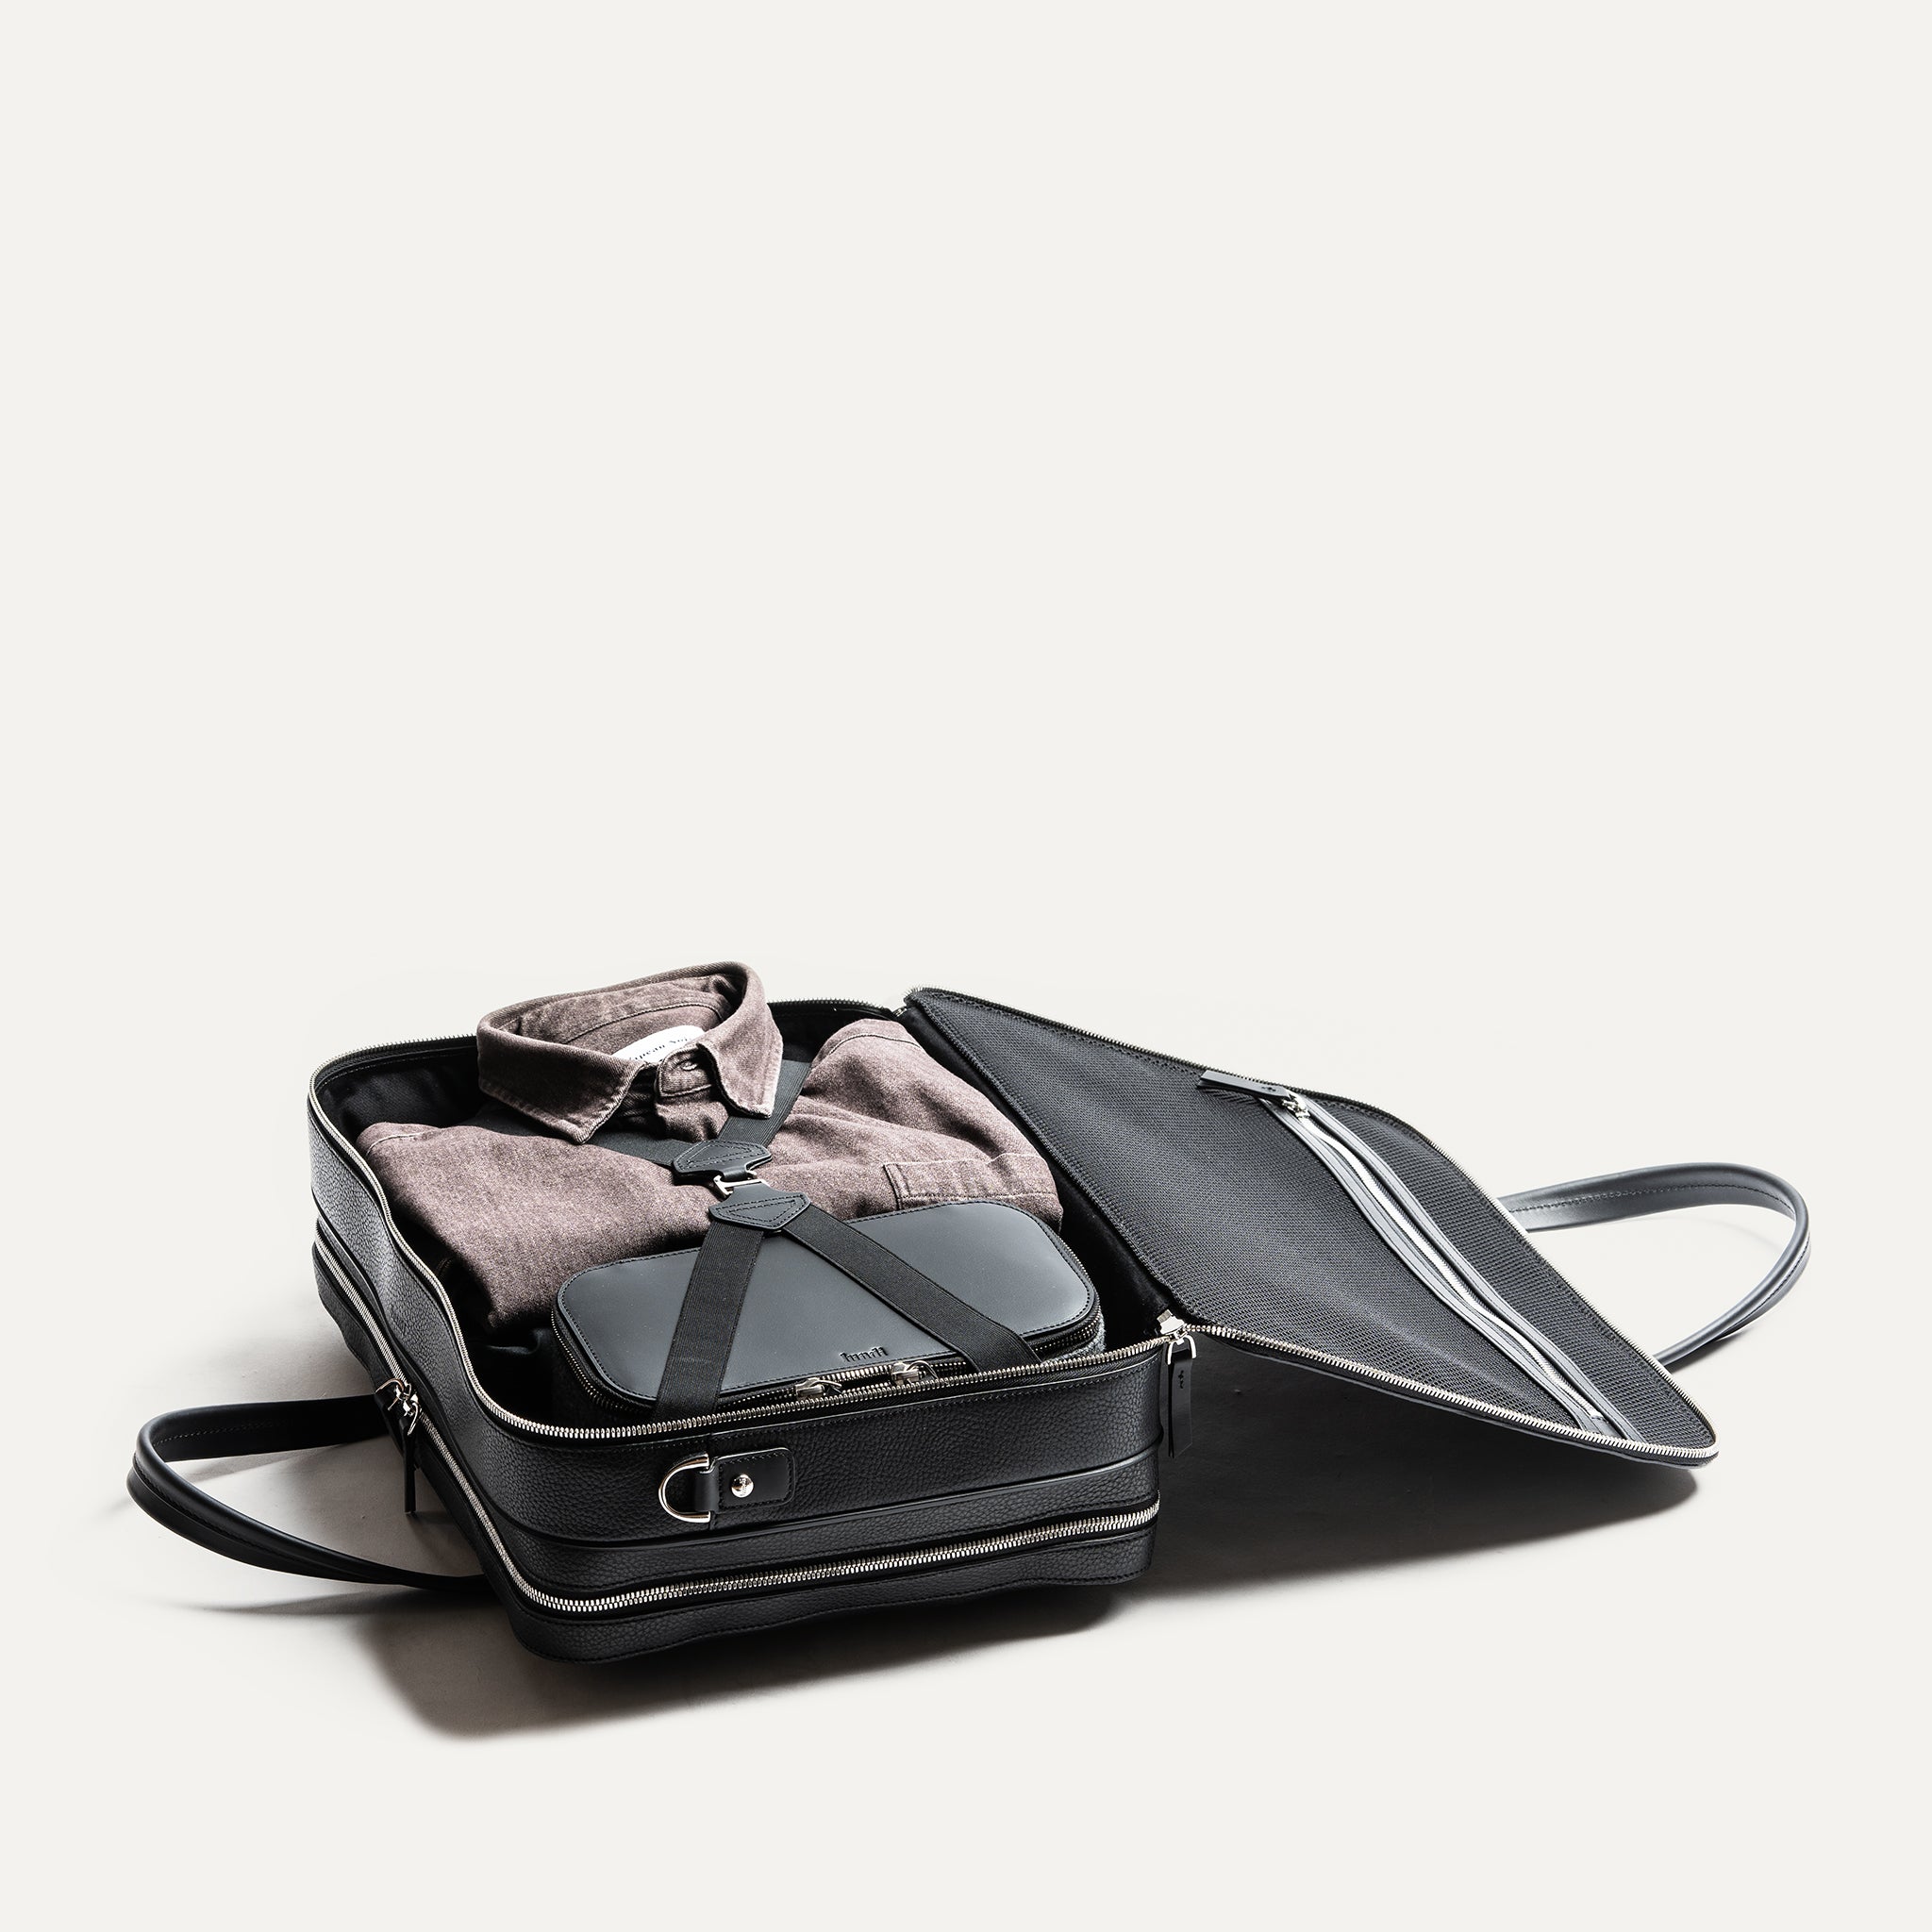 TILIO II - Black | lundi 36 hour laptop bag in full grained leather